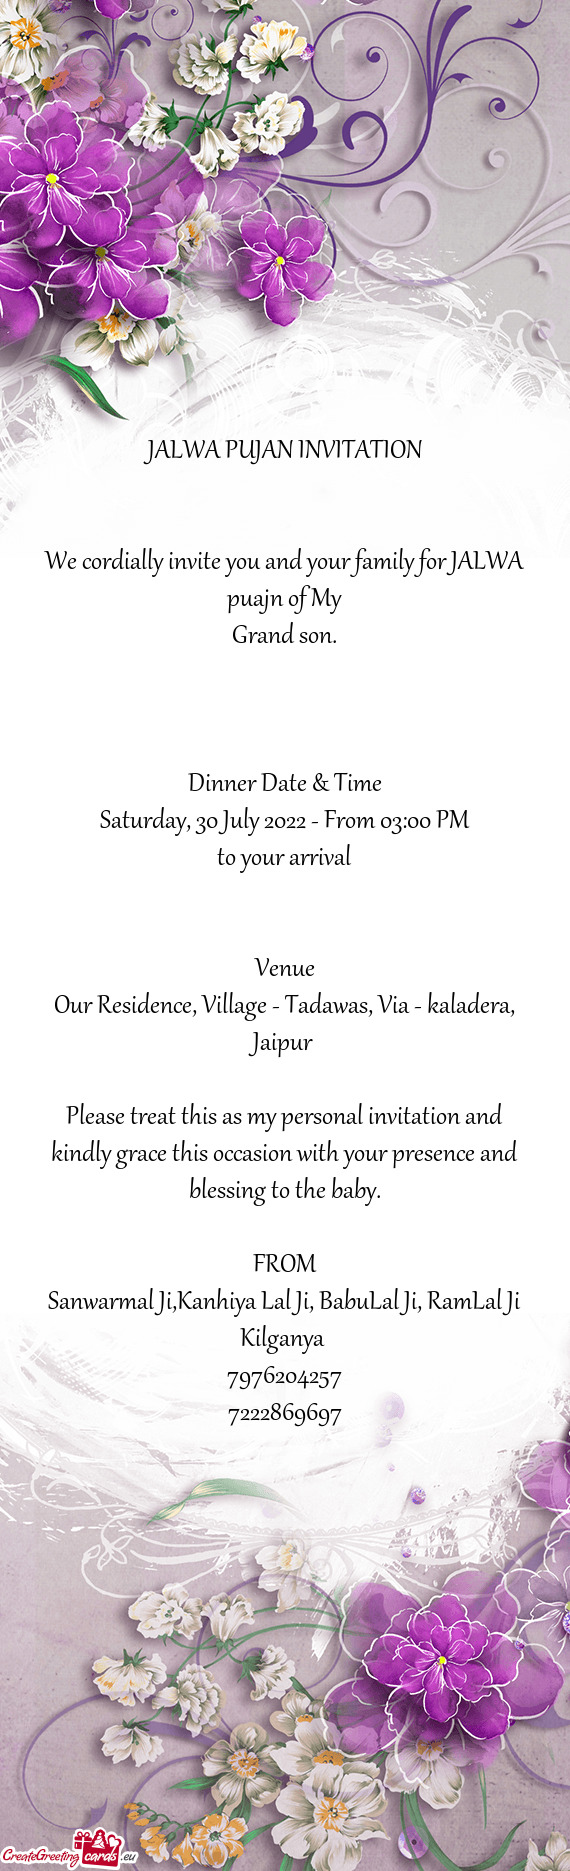 Dinner Date & Time